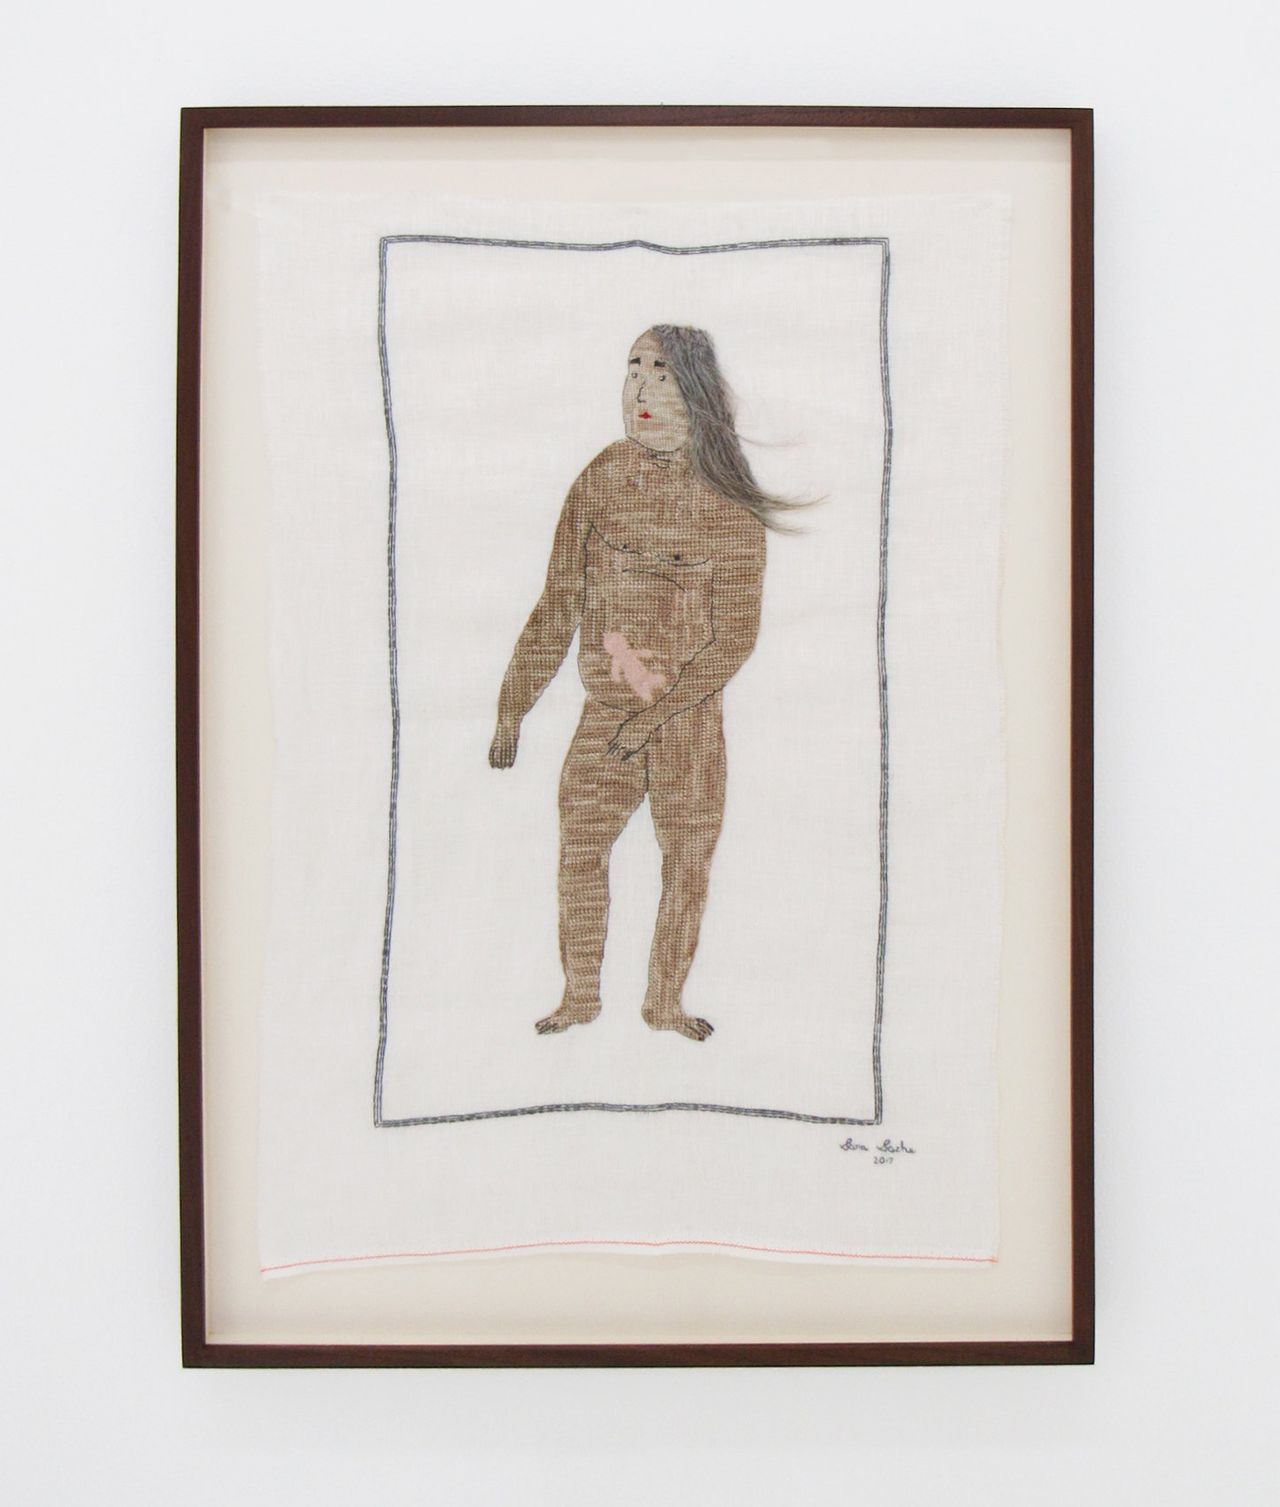 Sara Sachs, “Baby,” 2017, Cross-stitch on fabric, 27.5x18 inches